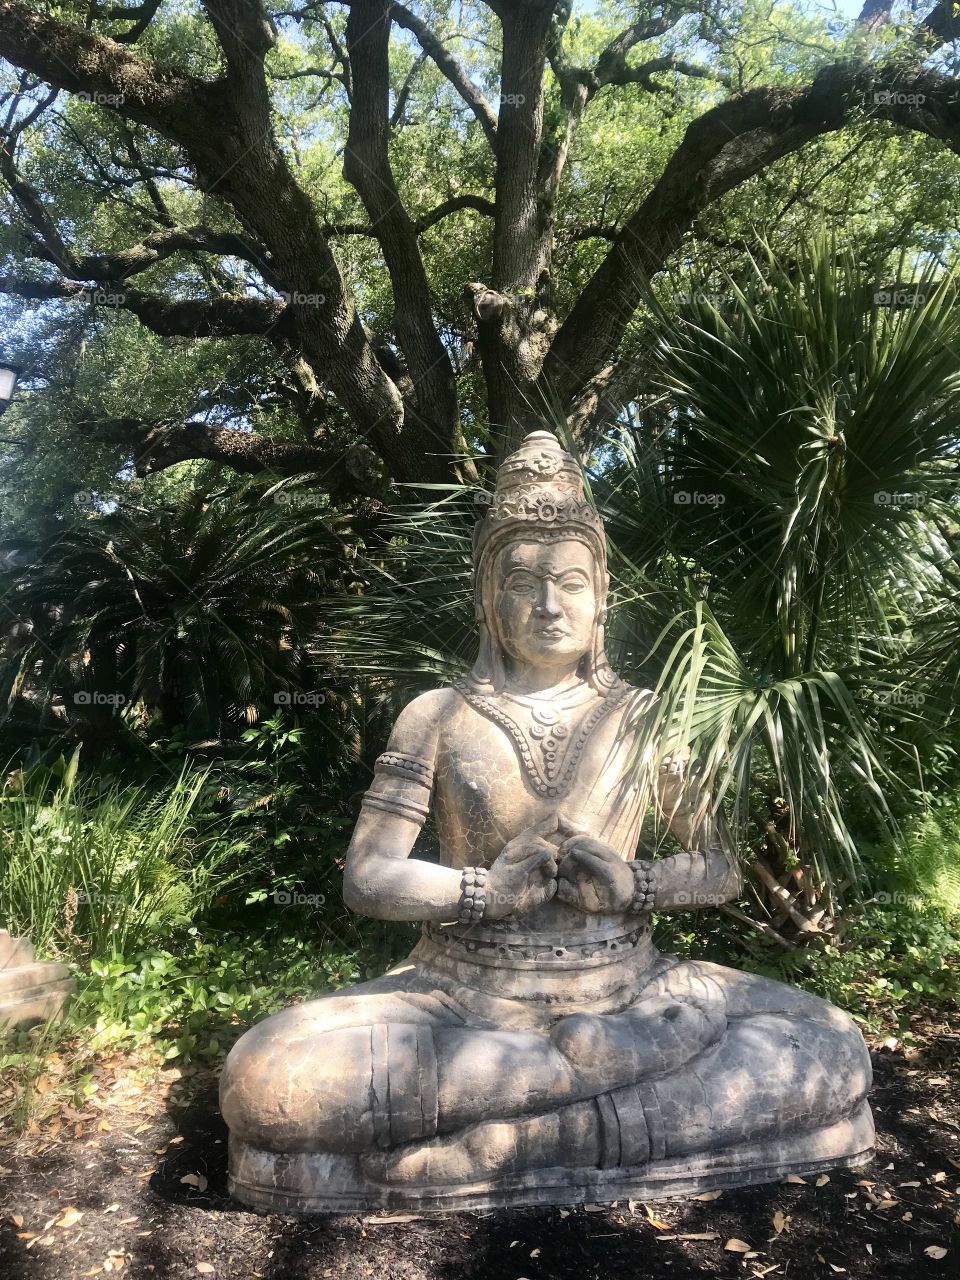 Meditations, New Orleans Audubon Zoo